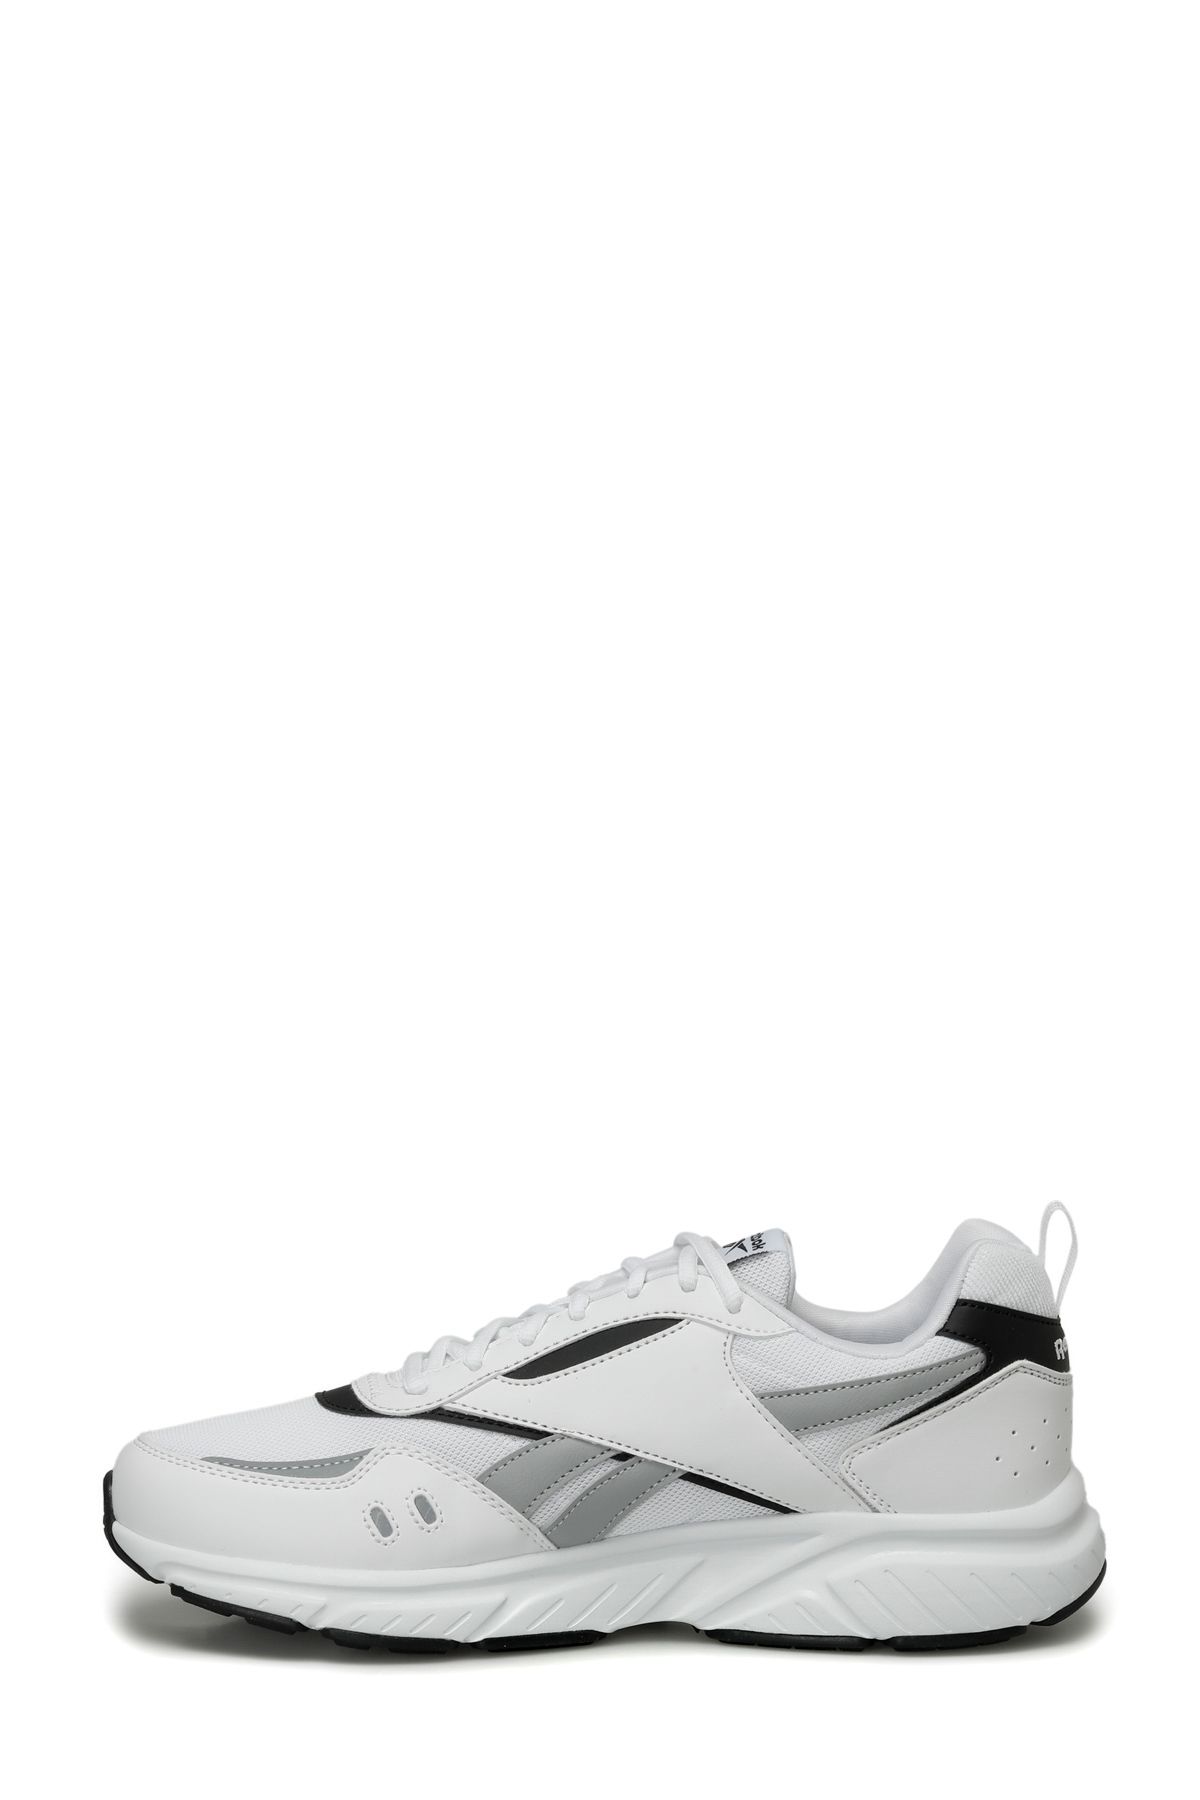 Reebok Royal Hyperium 3 کفش ورزشی یونیسکس سفید